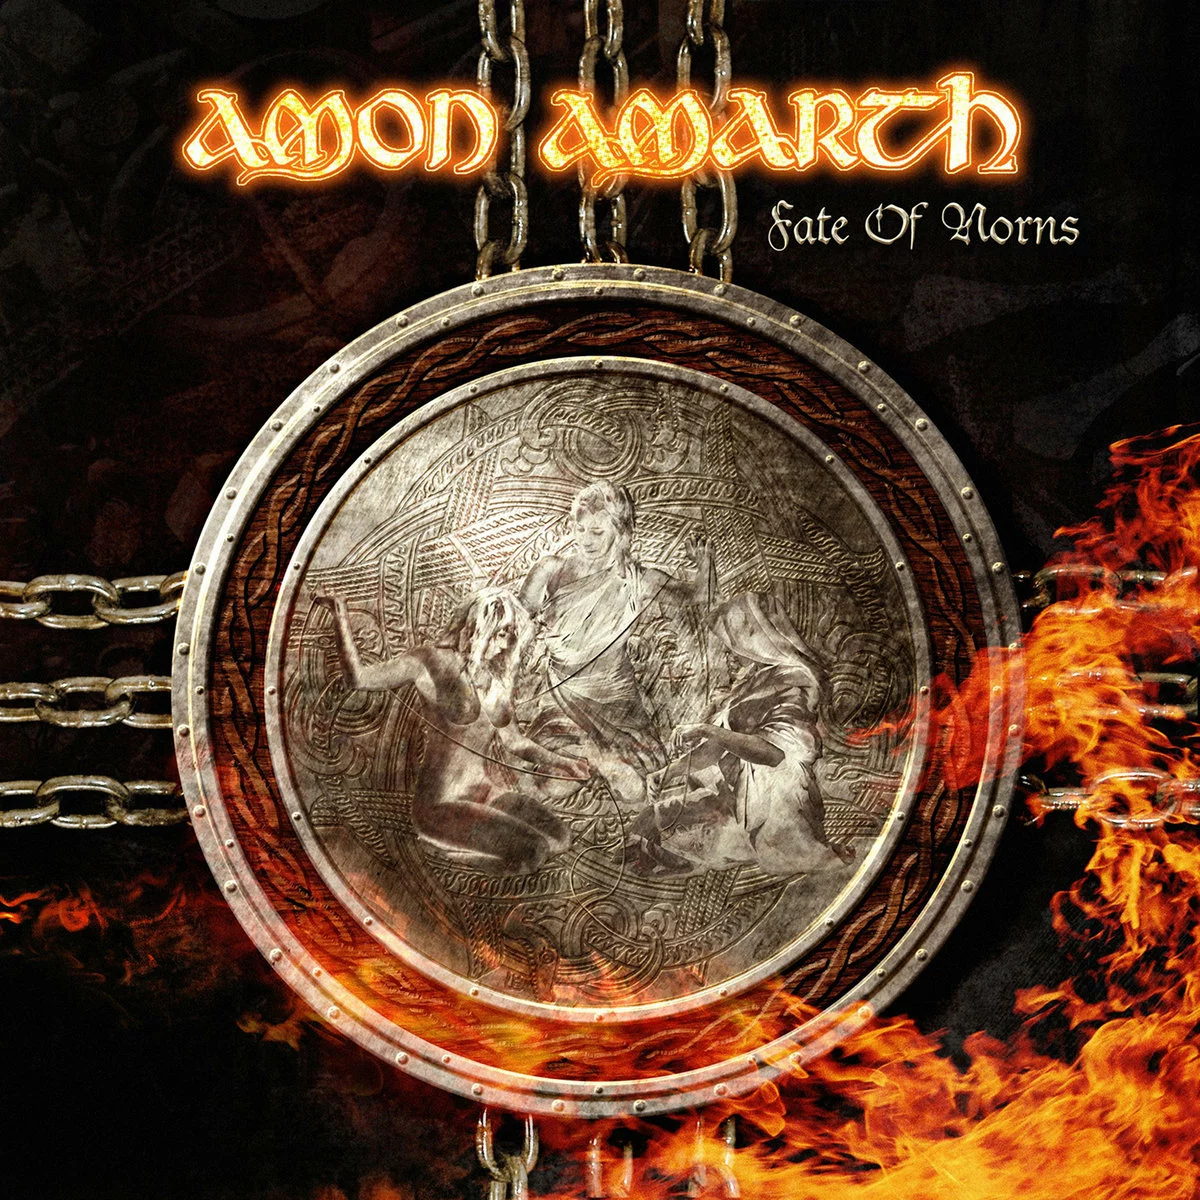 AMON AMARTH - Fate Of Norns [BLACK LP]